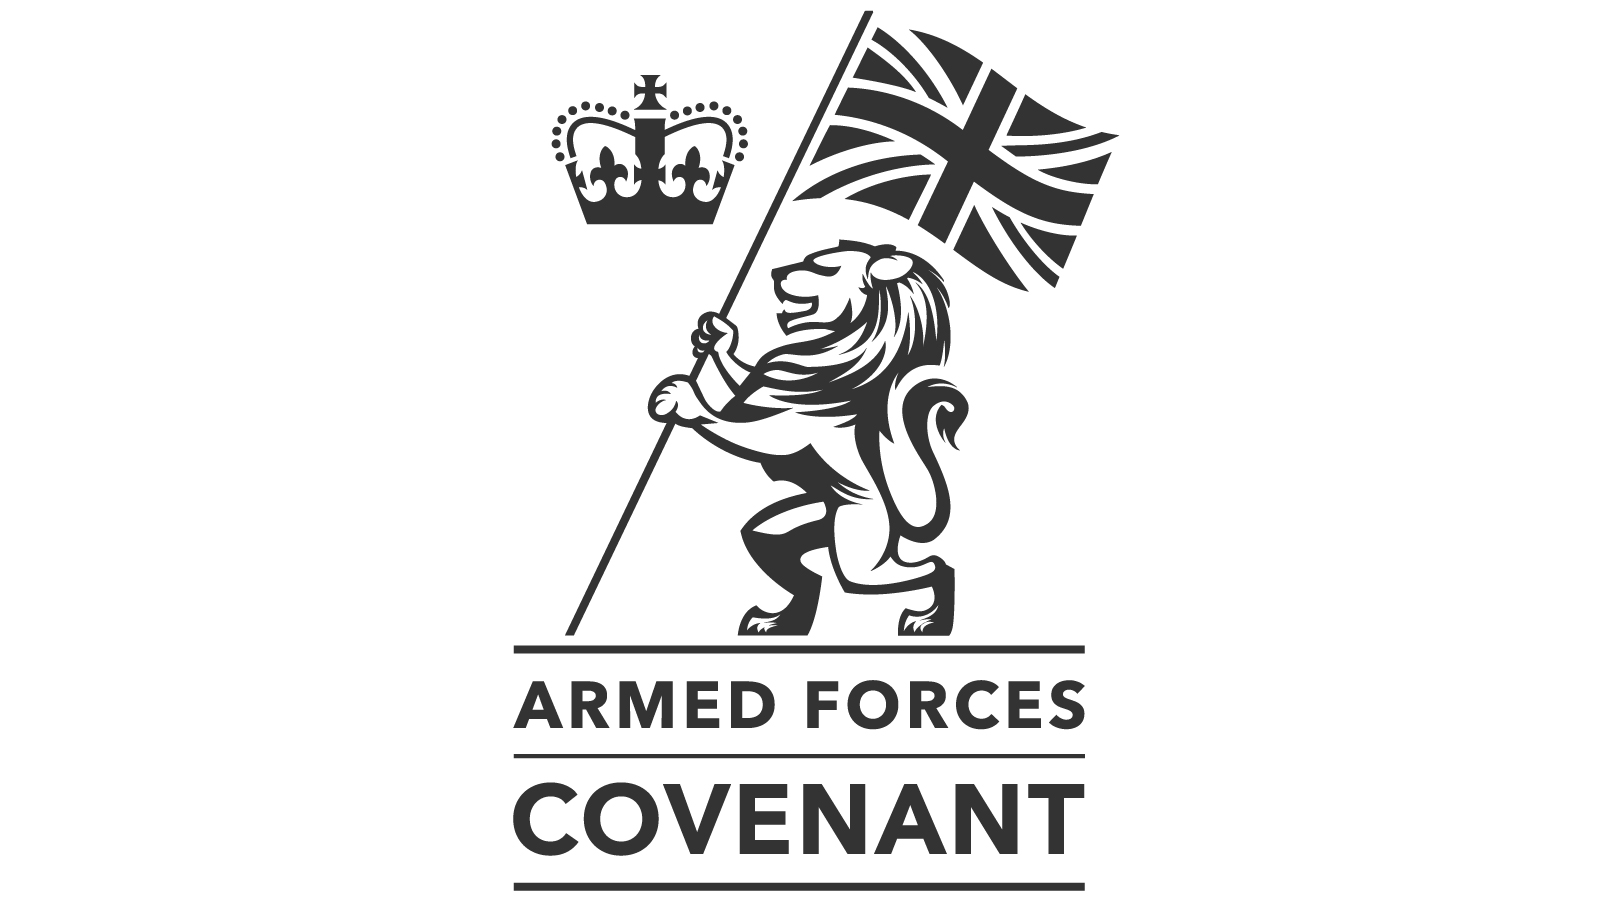 armed-forces-covenant-logo-2016-200x282-1-2.jpg